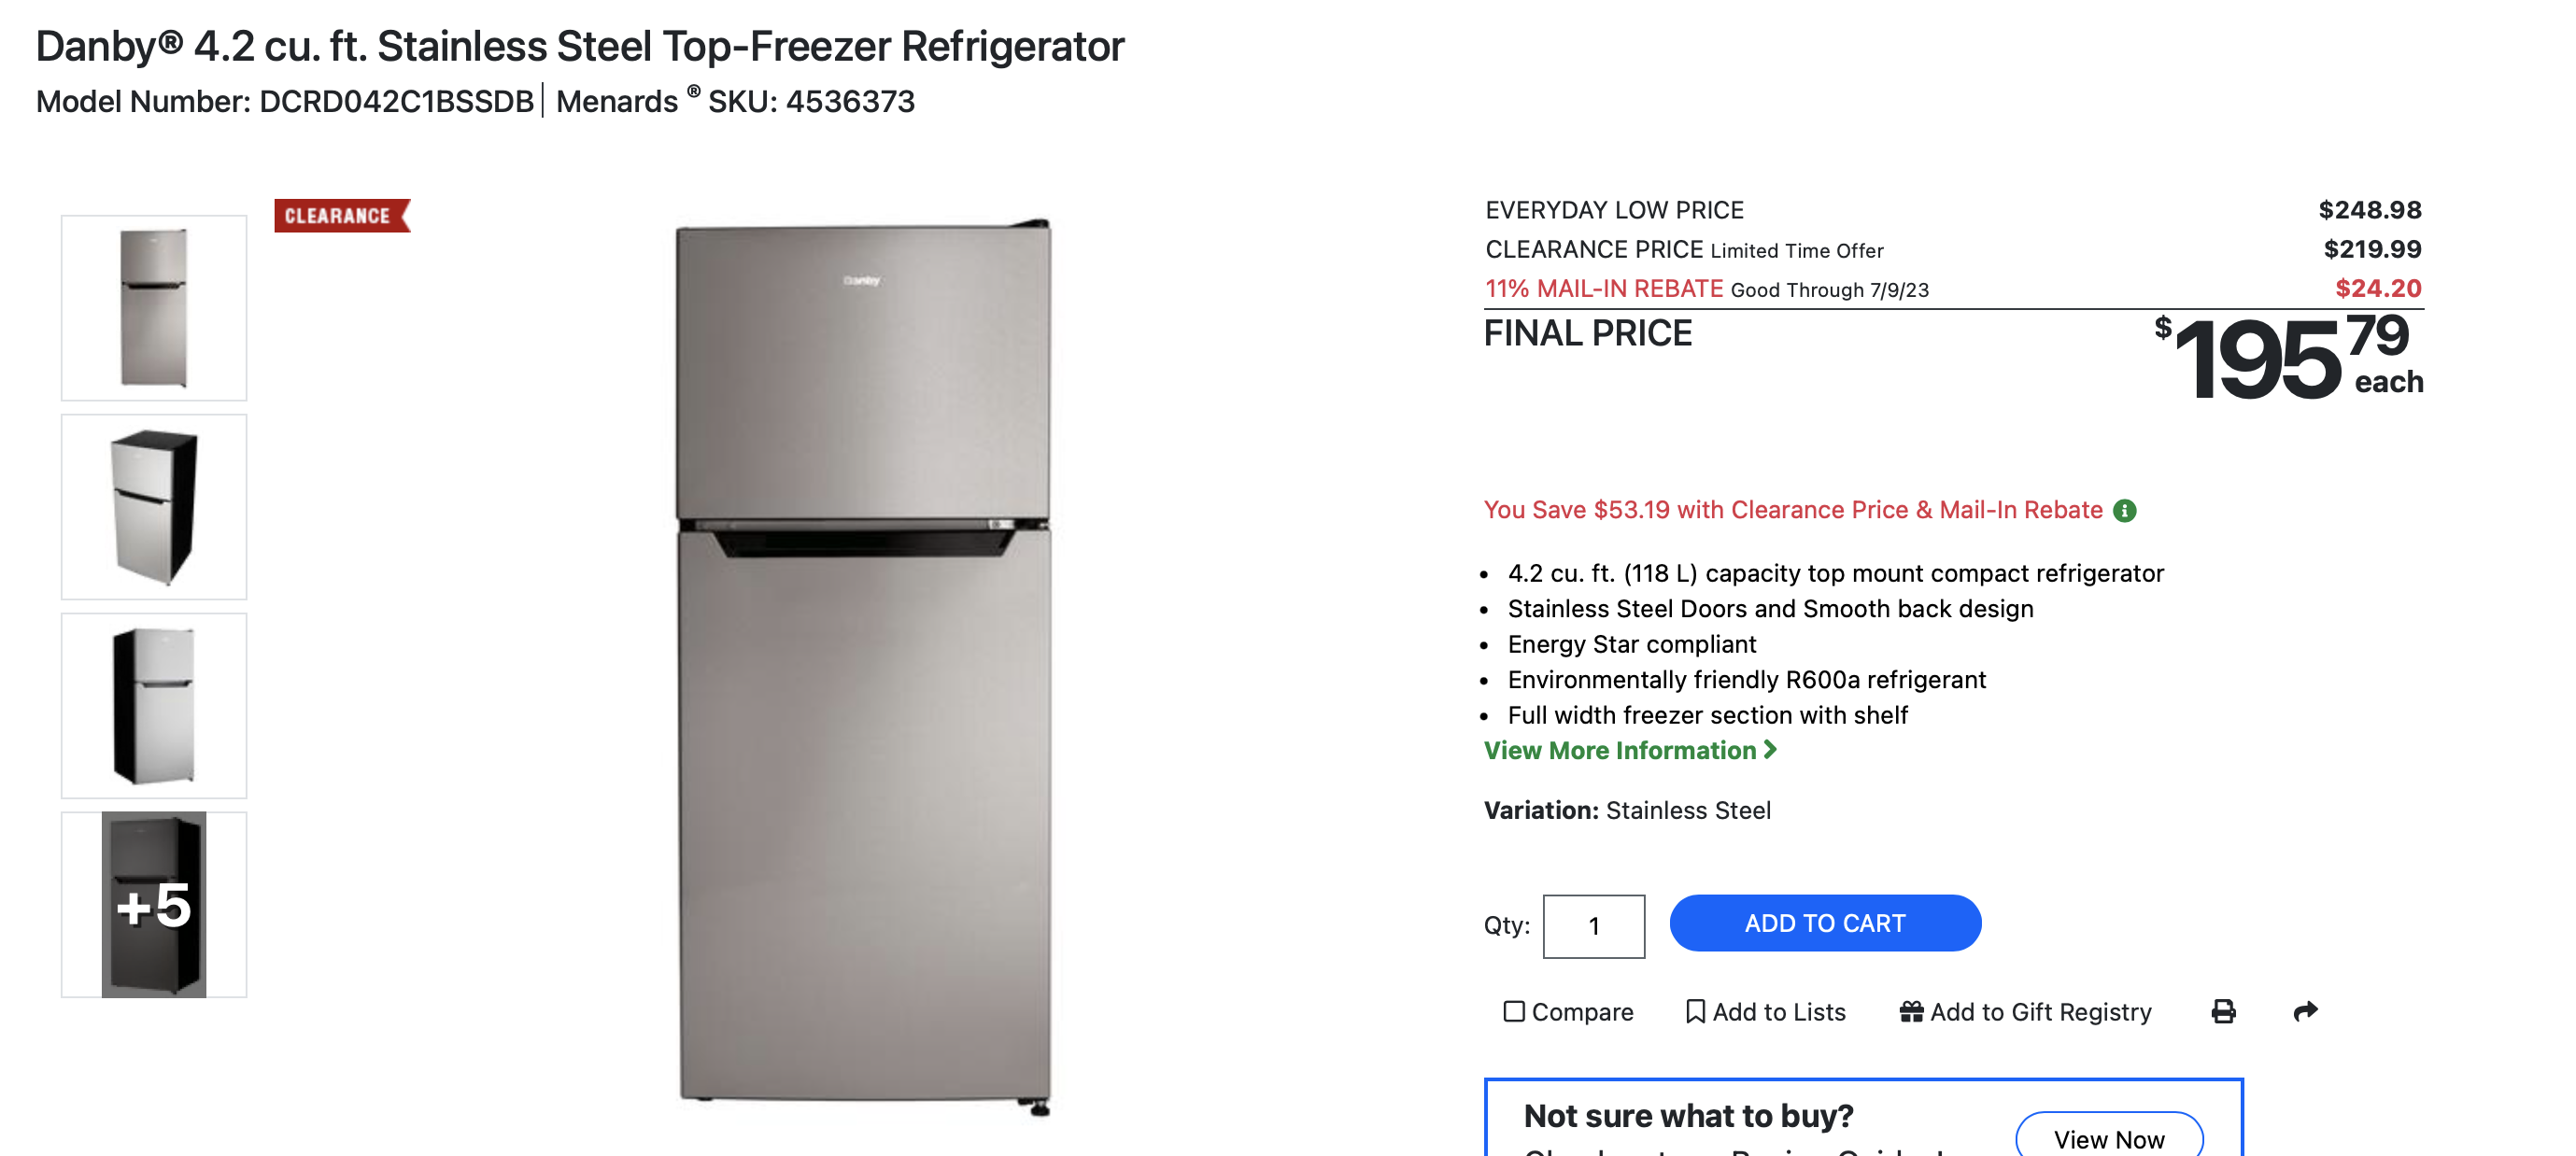 Danby® 4.2 cu. ft. Stainless Steel Top-Freezer Refrigerator $219.99